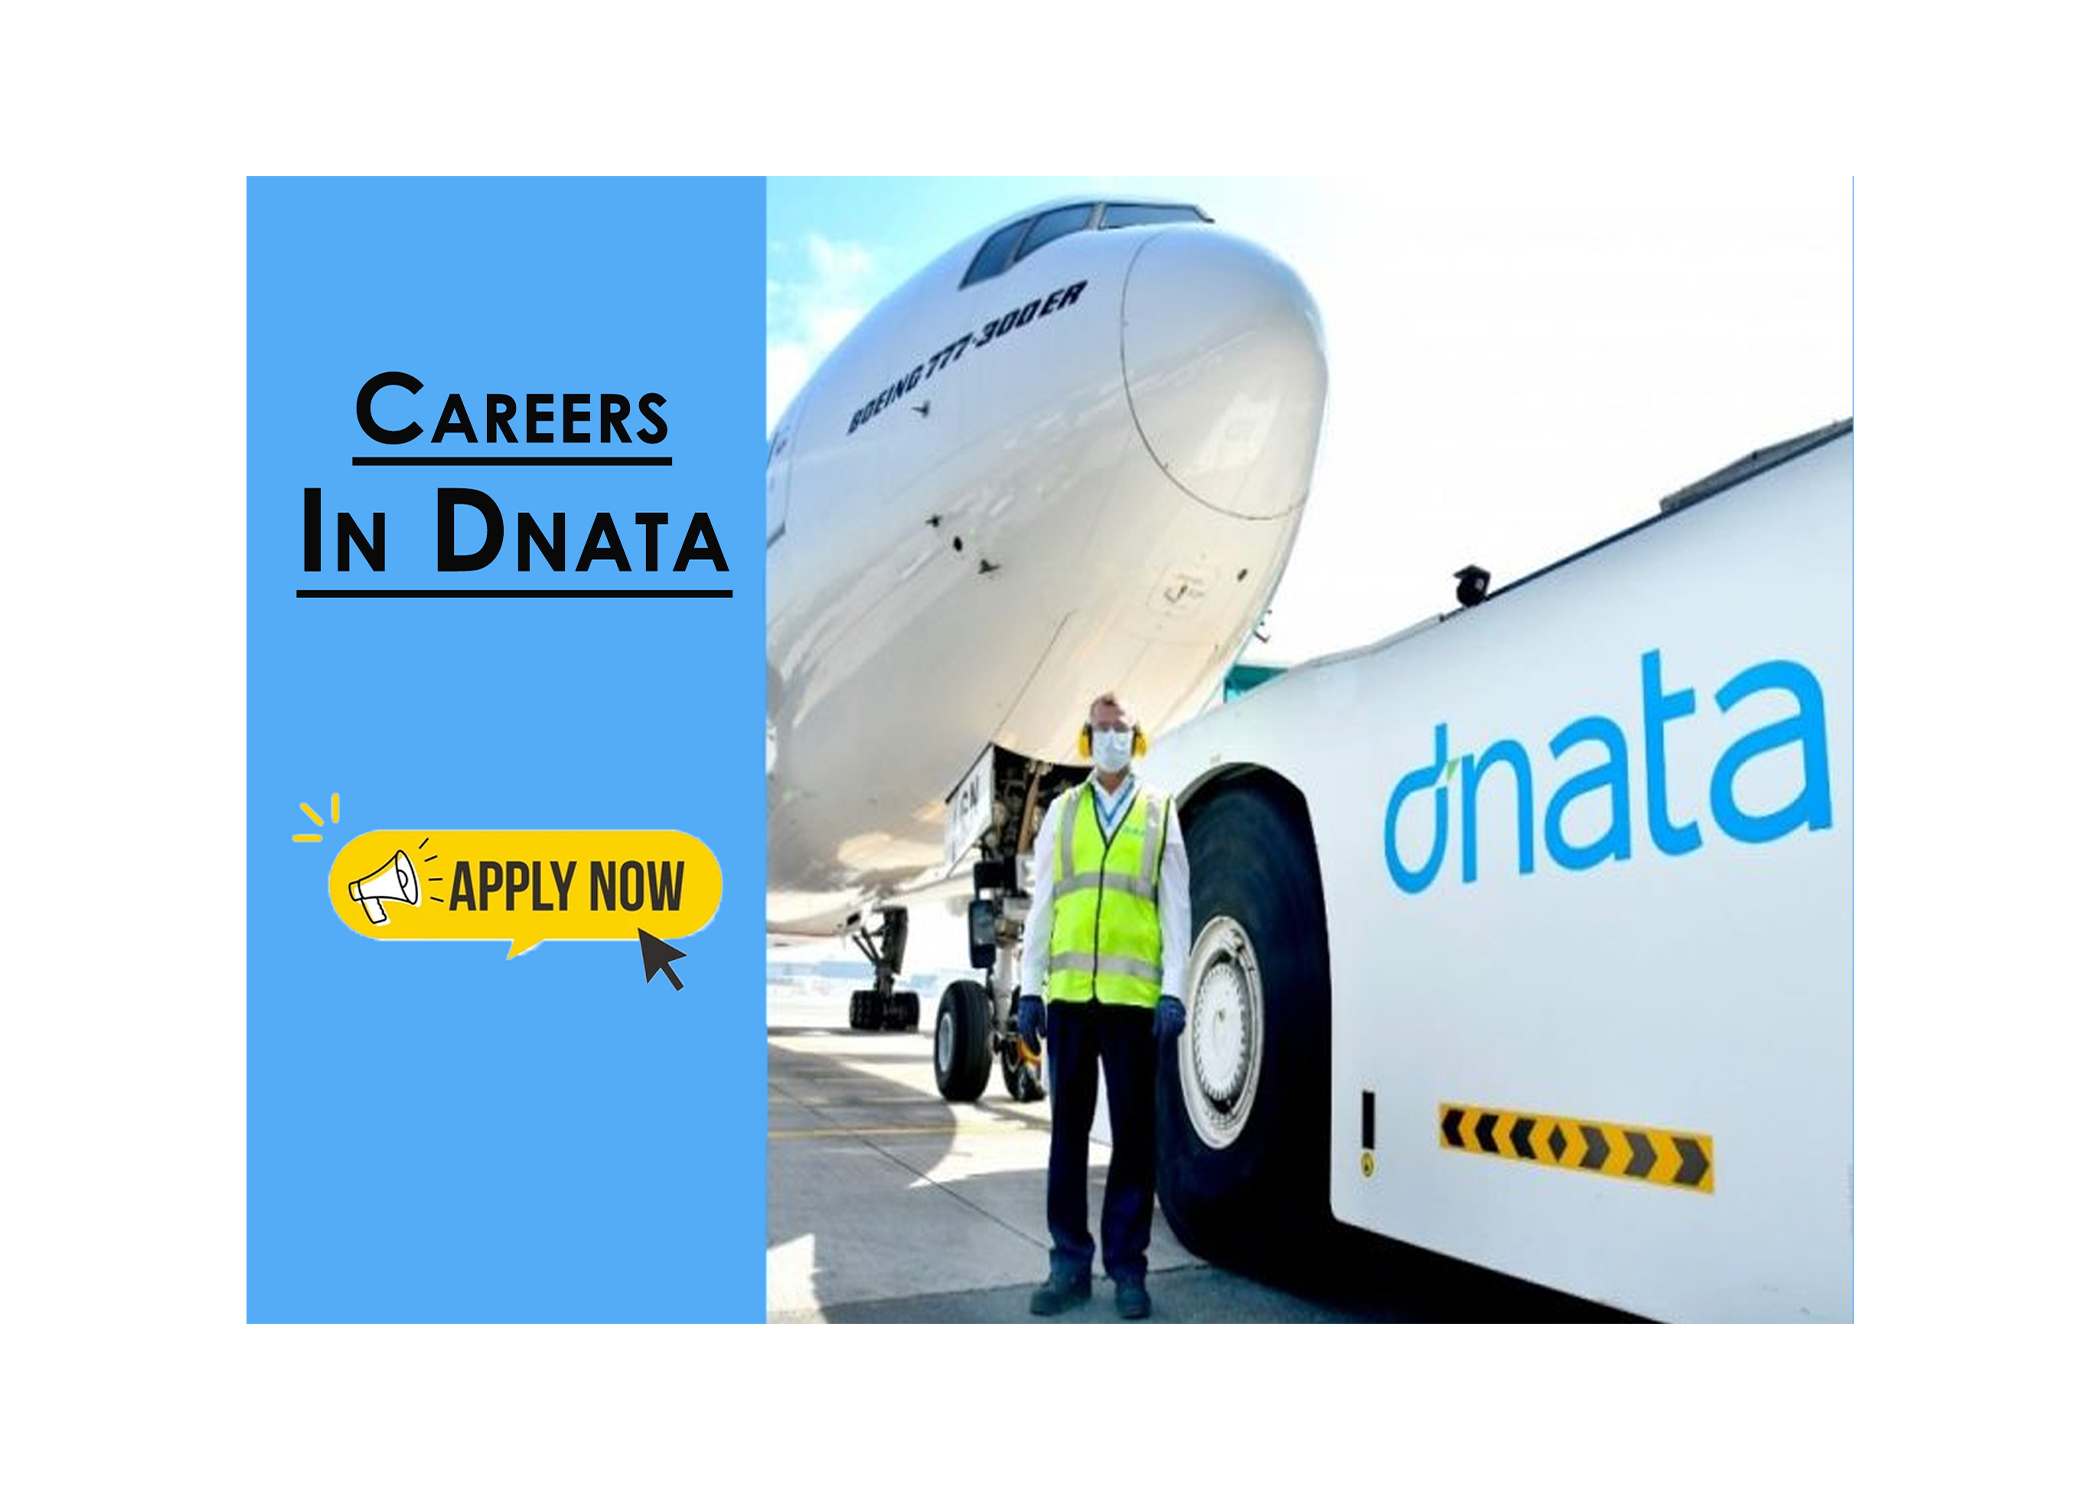 Dnata Dubai Careers / Dubai National Air Travel Agency Jobs